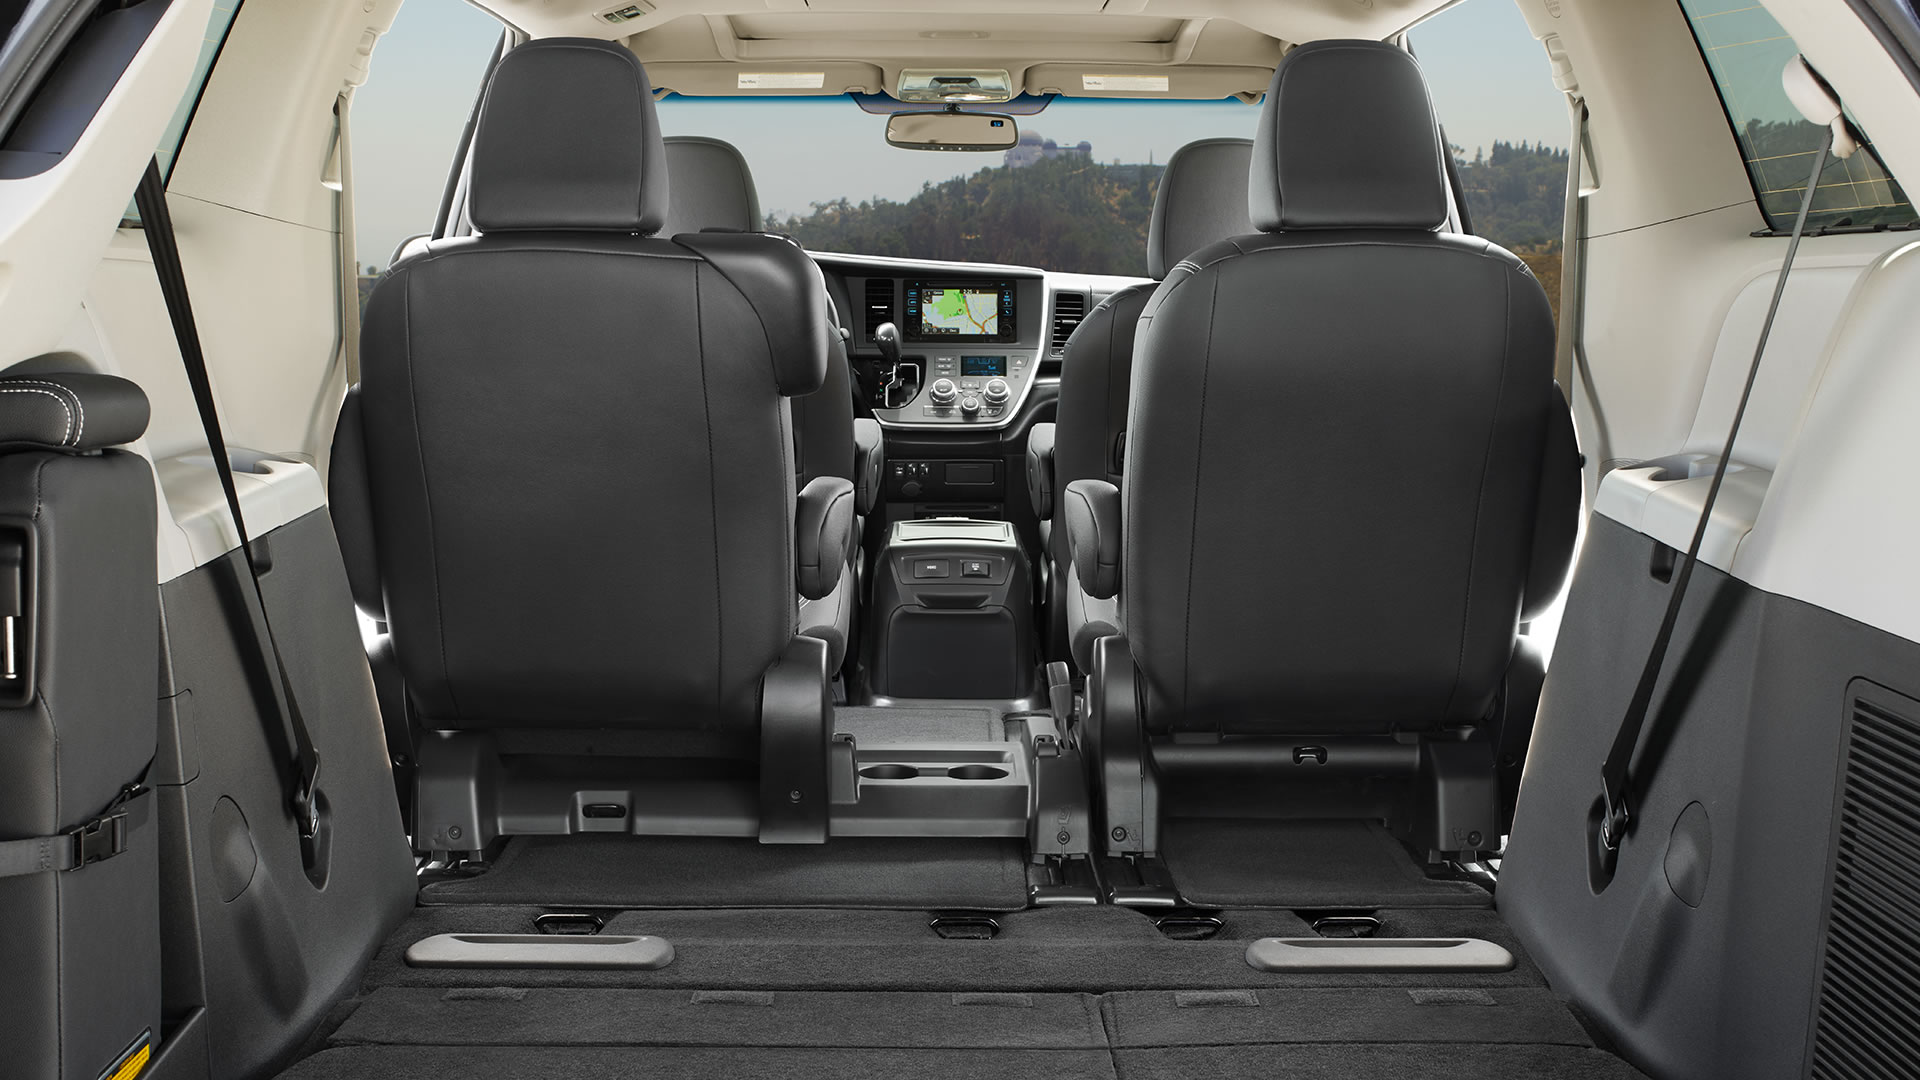 Vehicle Highlight 2015 Toyota Sienna Minivan 802cars Com